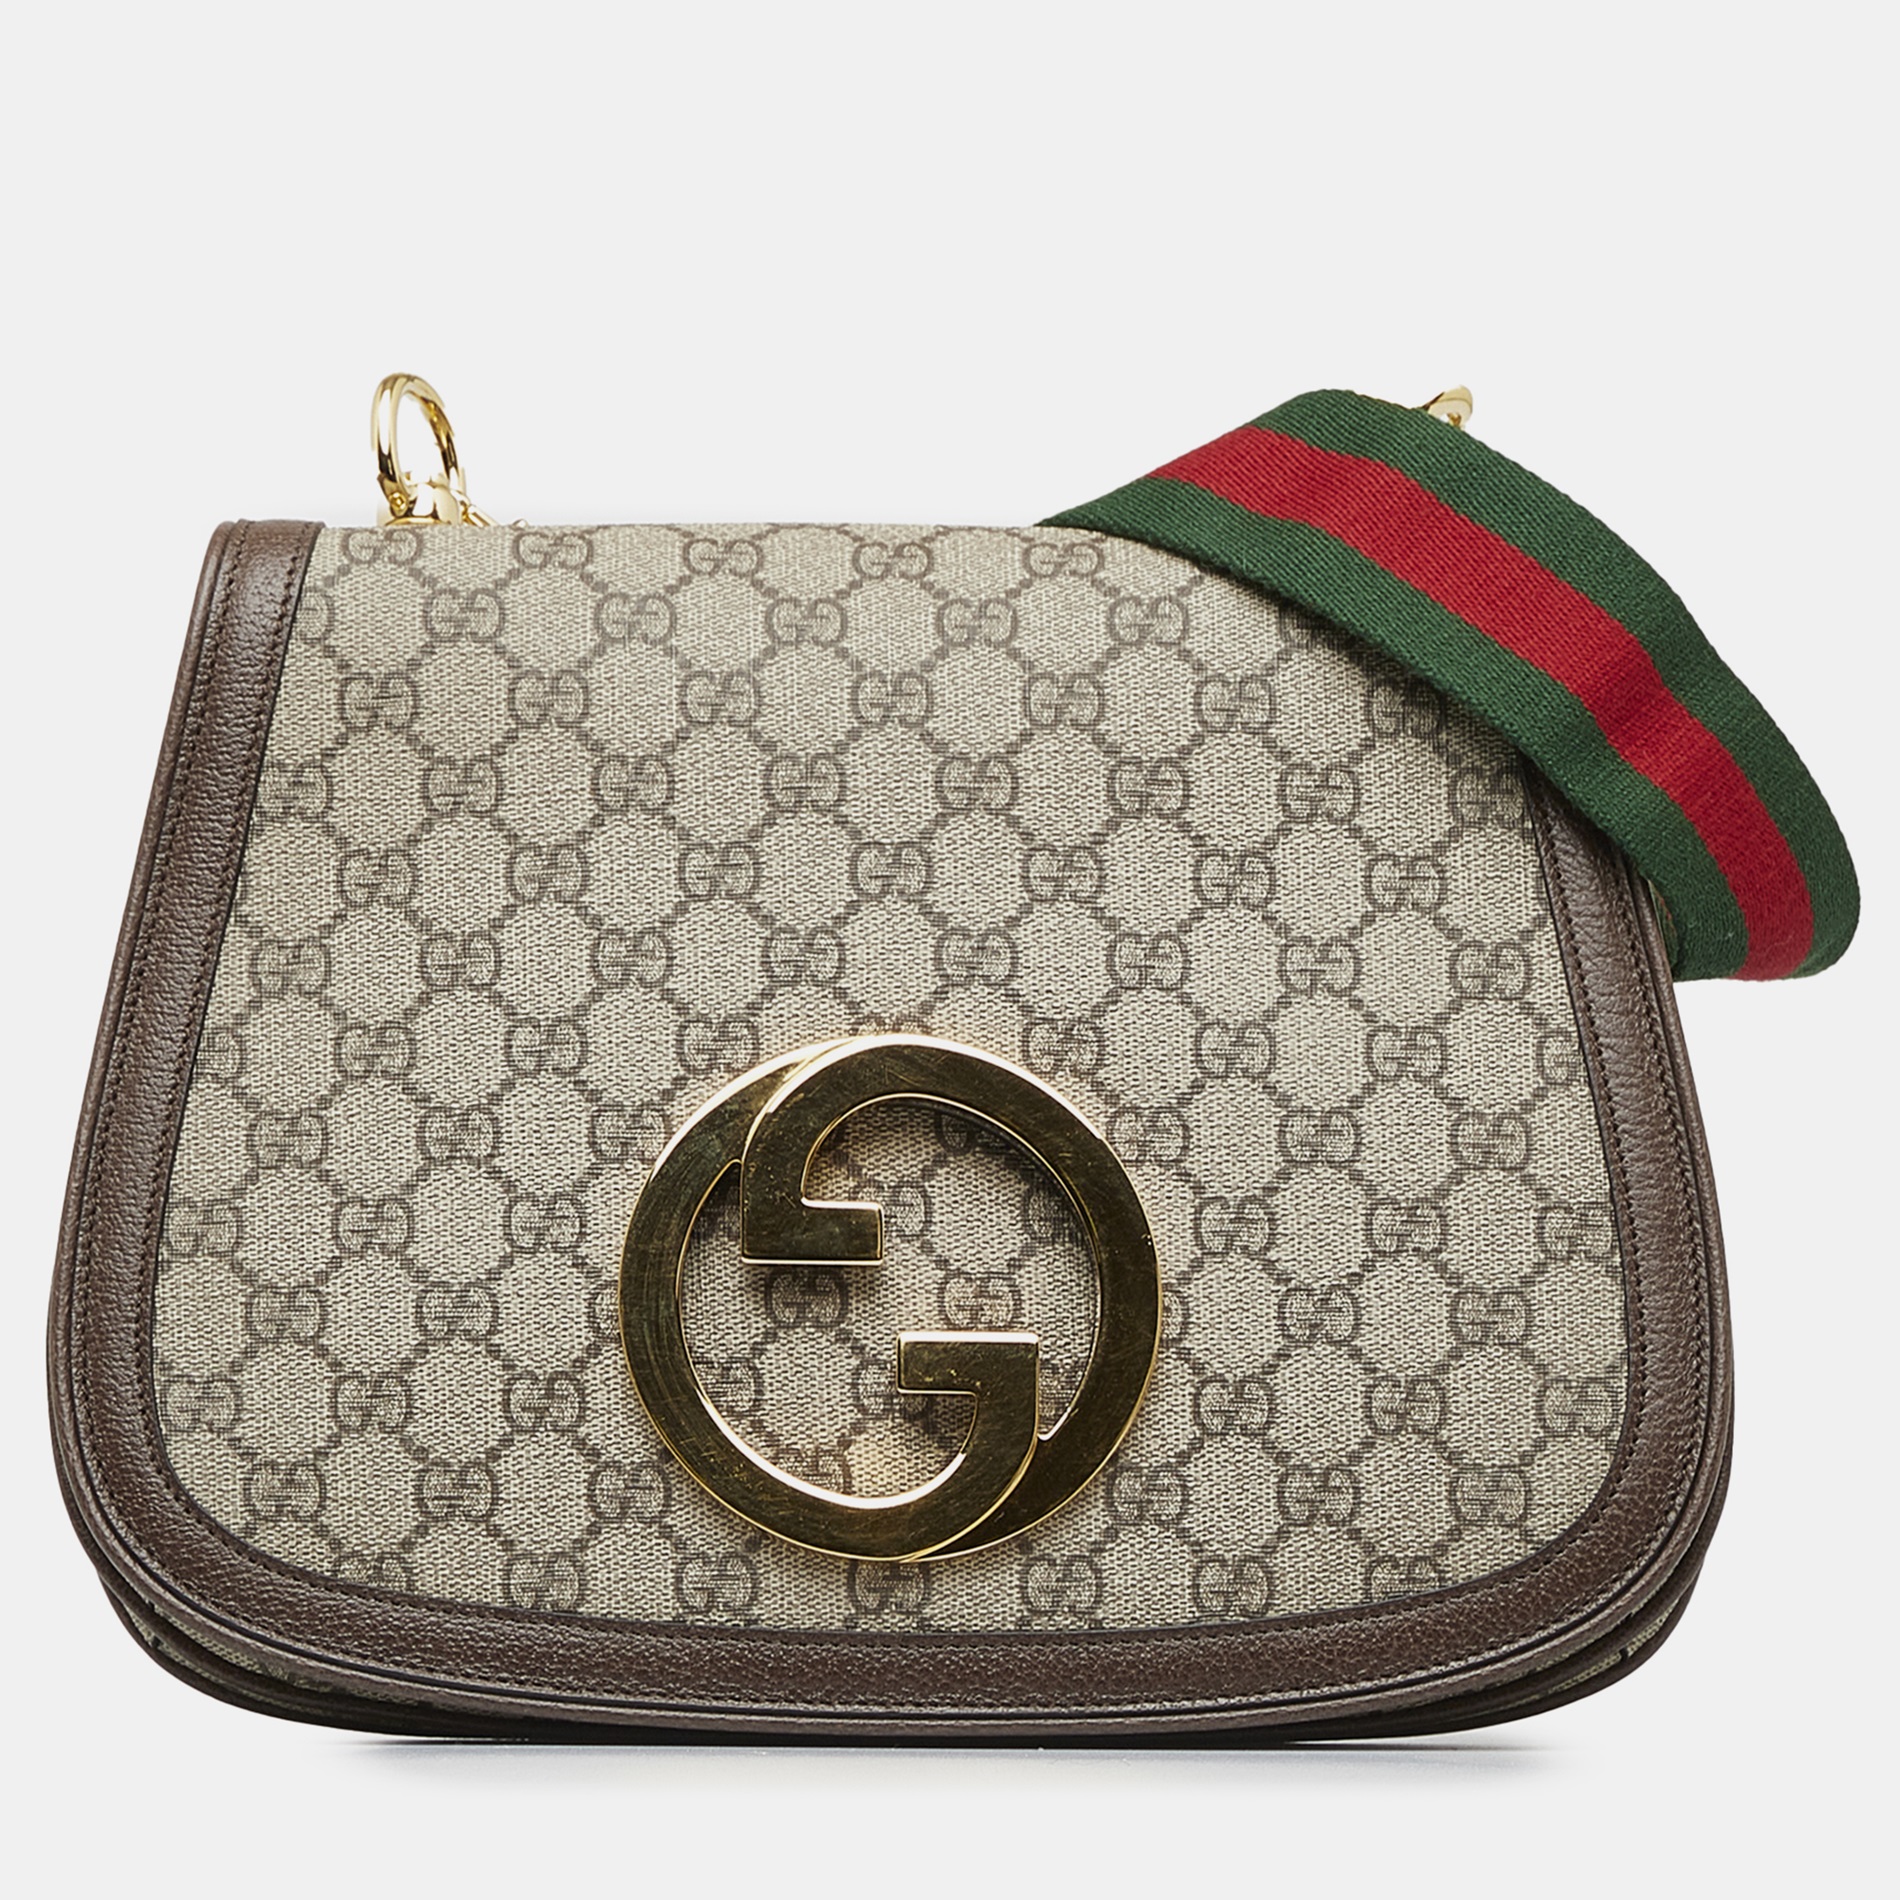 Gucci Medium GG Supreme Blondie Bag